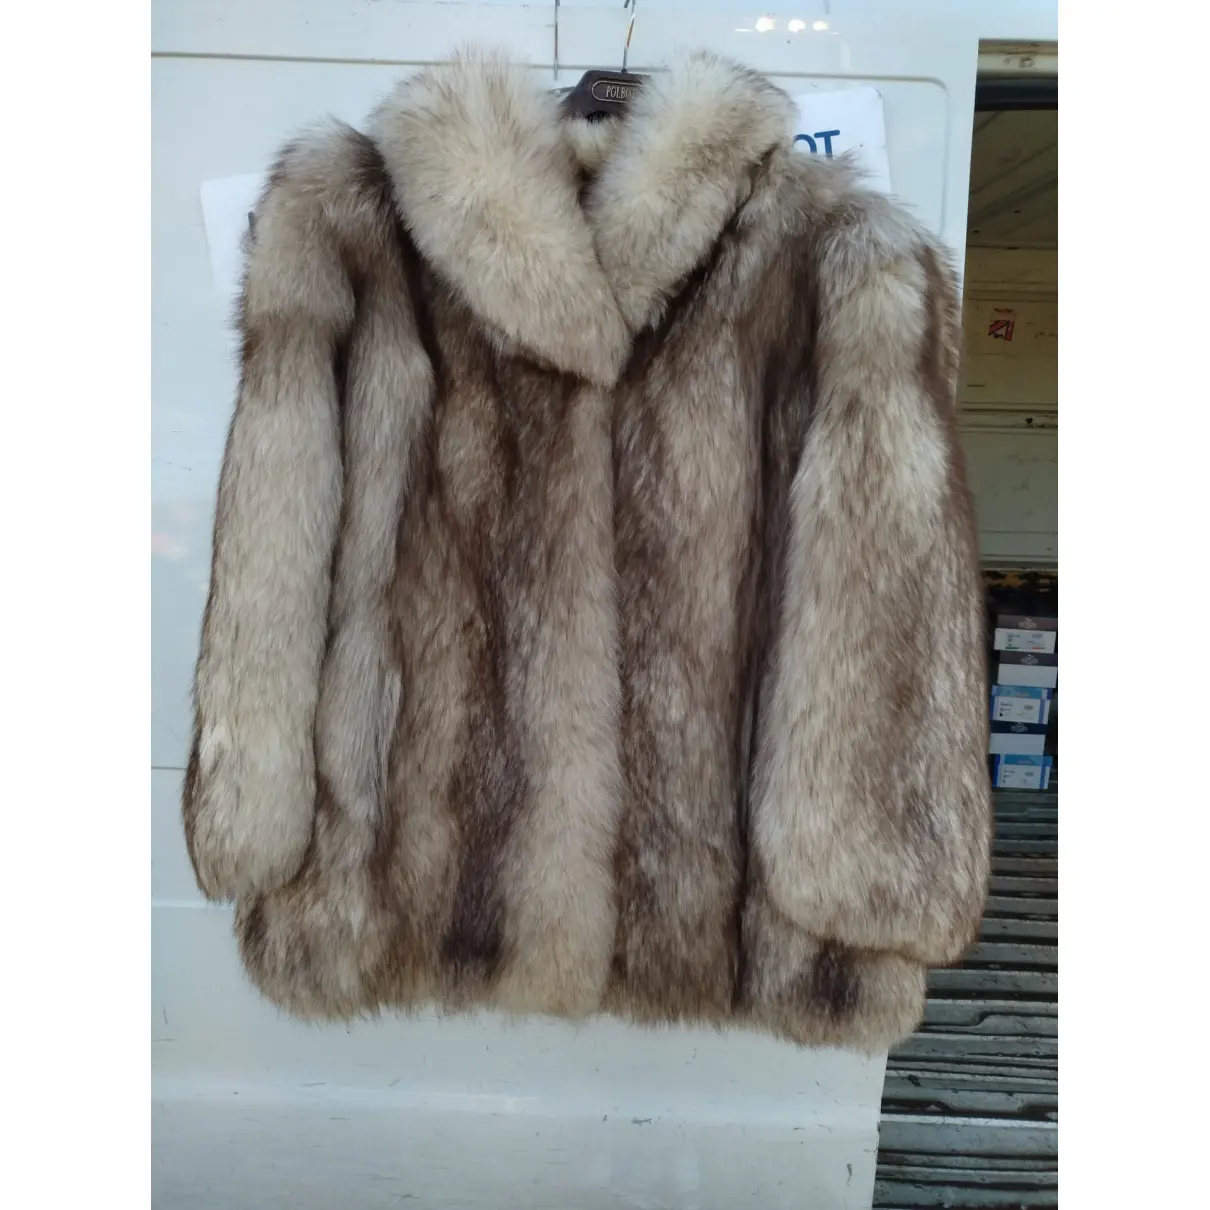 Buy Pellicciai Fox coat online